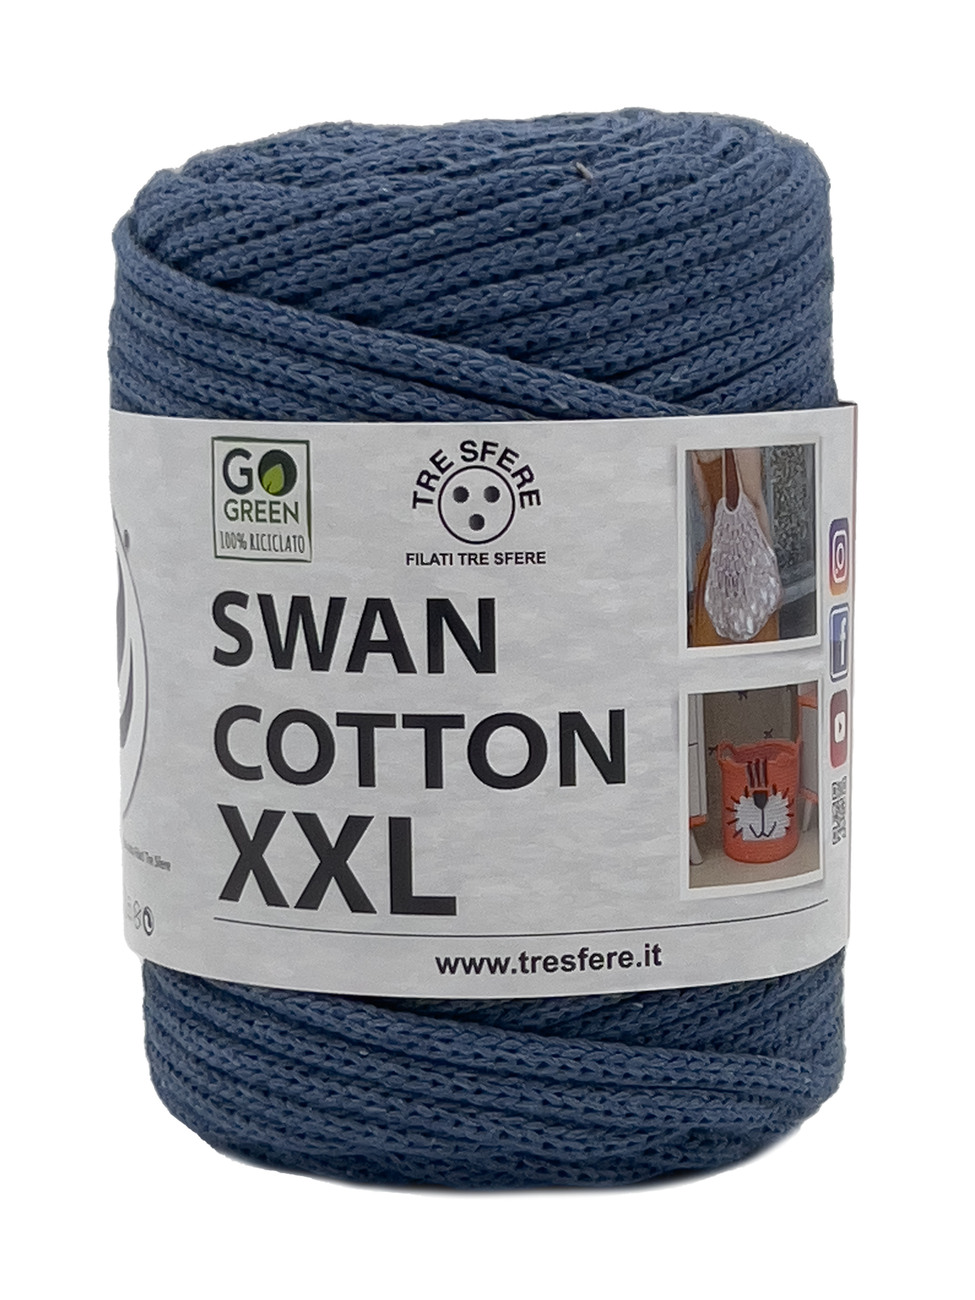 CORDINO SWAN COTTON XXL 250 grammi - Jeans